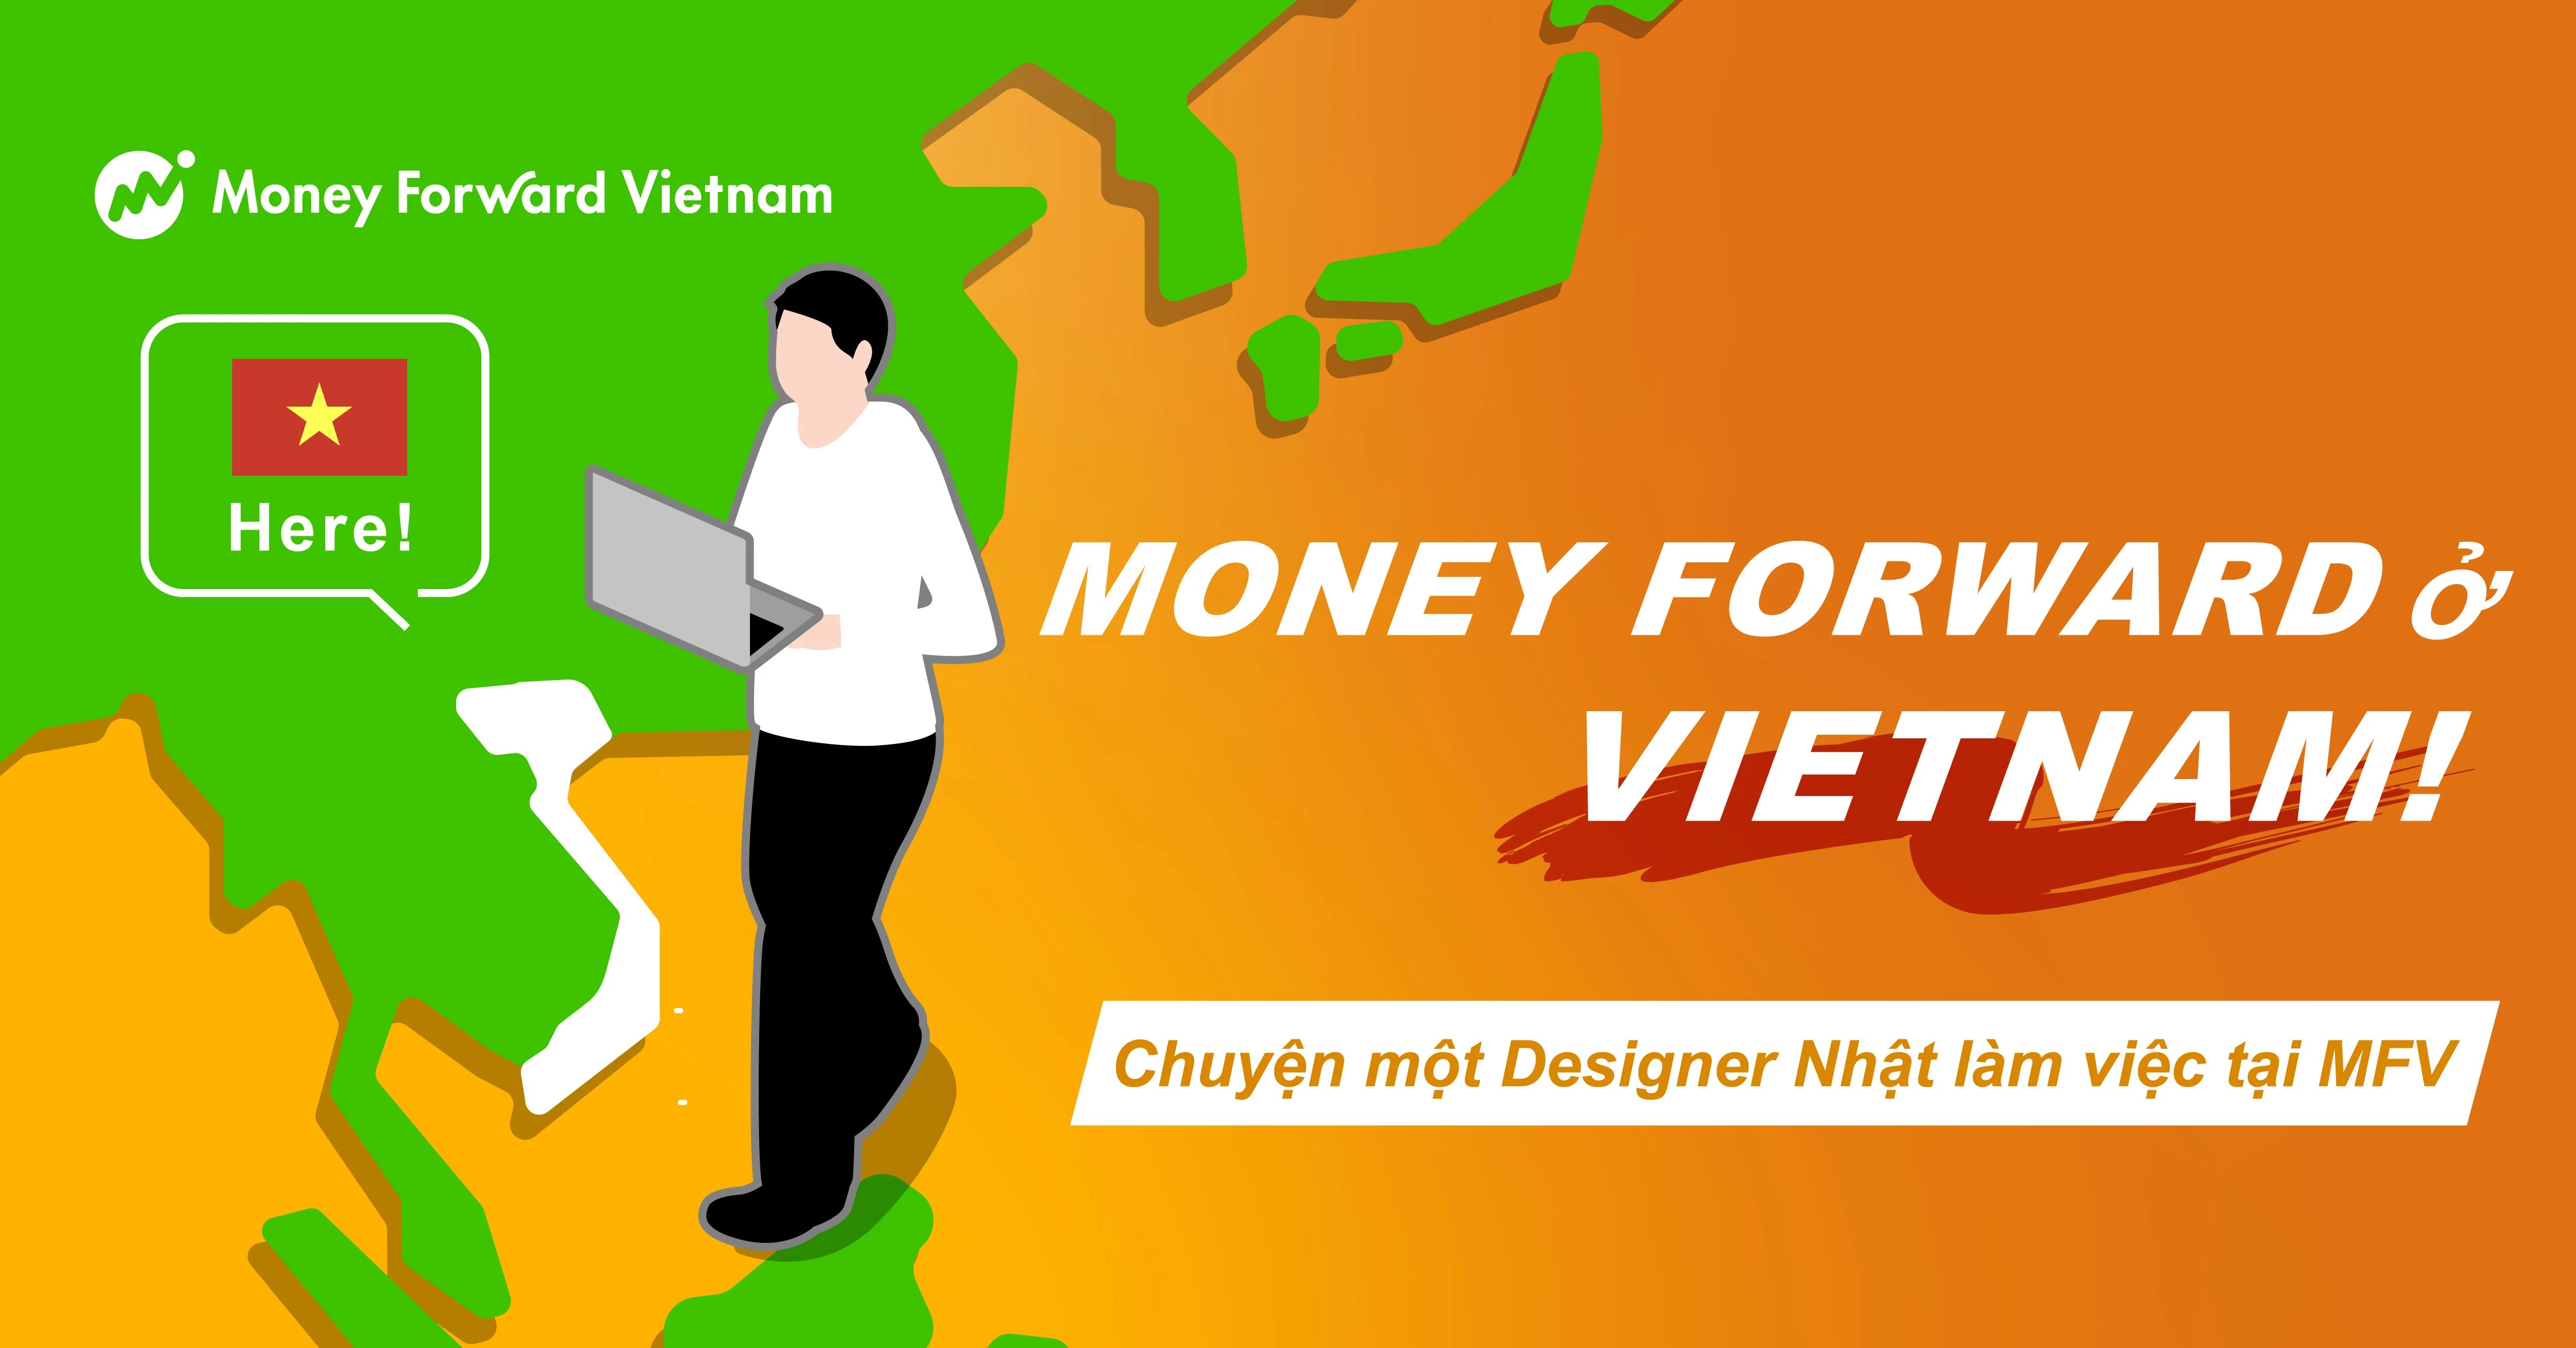 Shino - Designer Nhật tại Money Forward Việt Nam